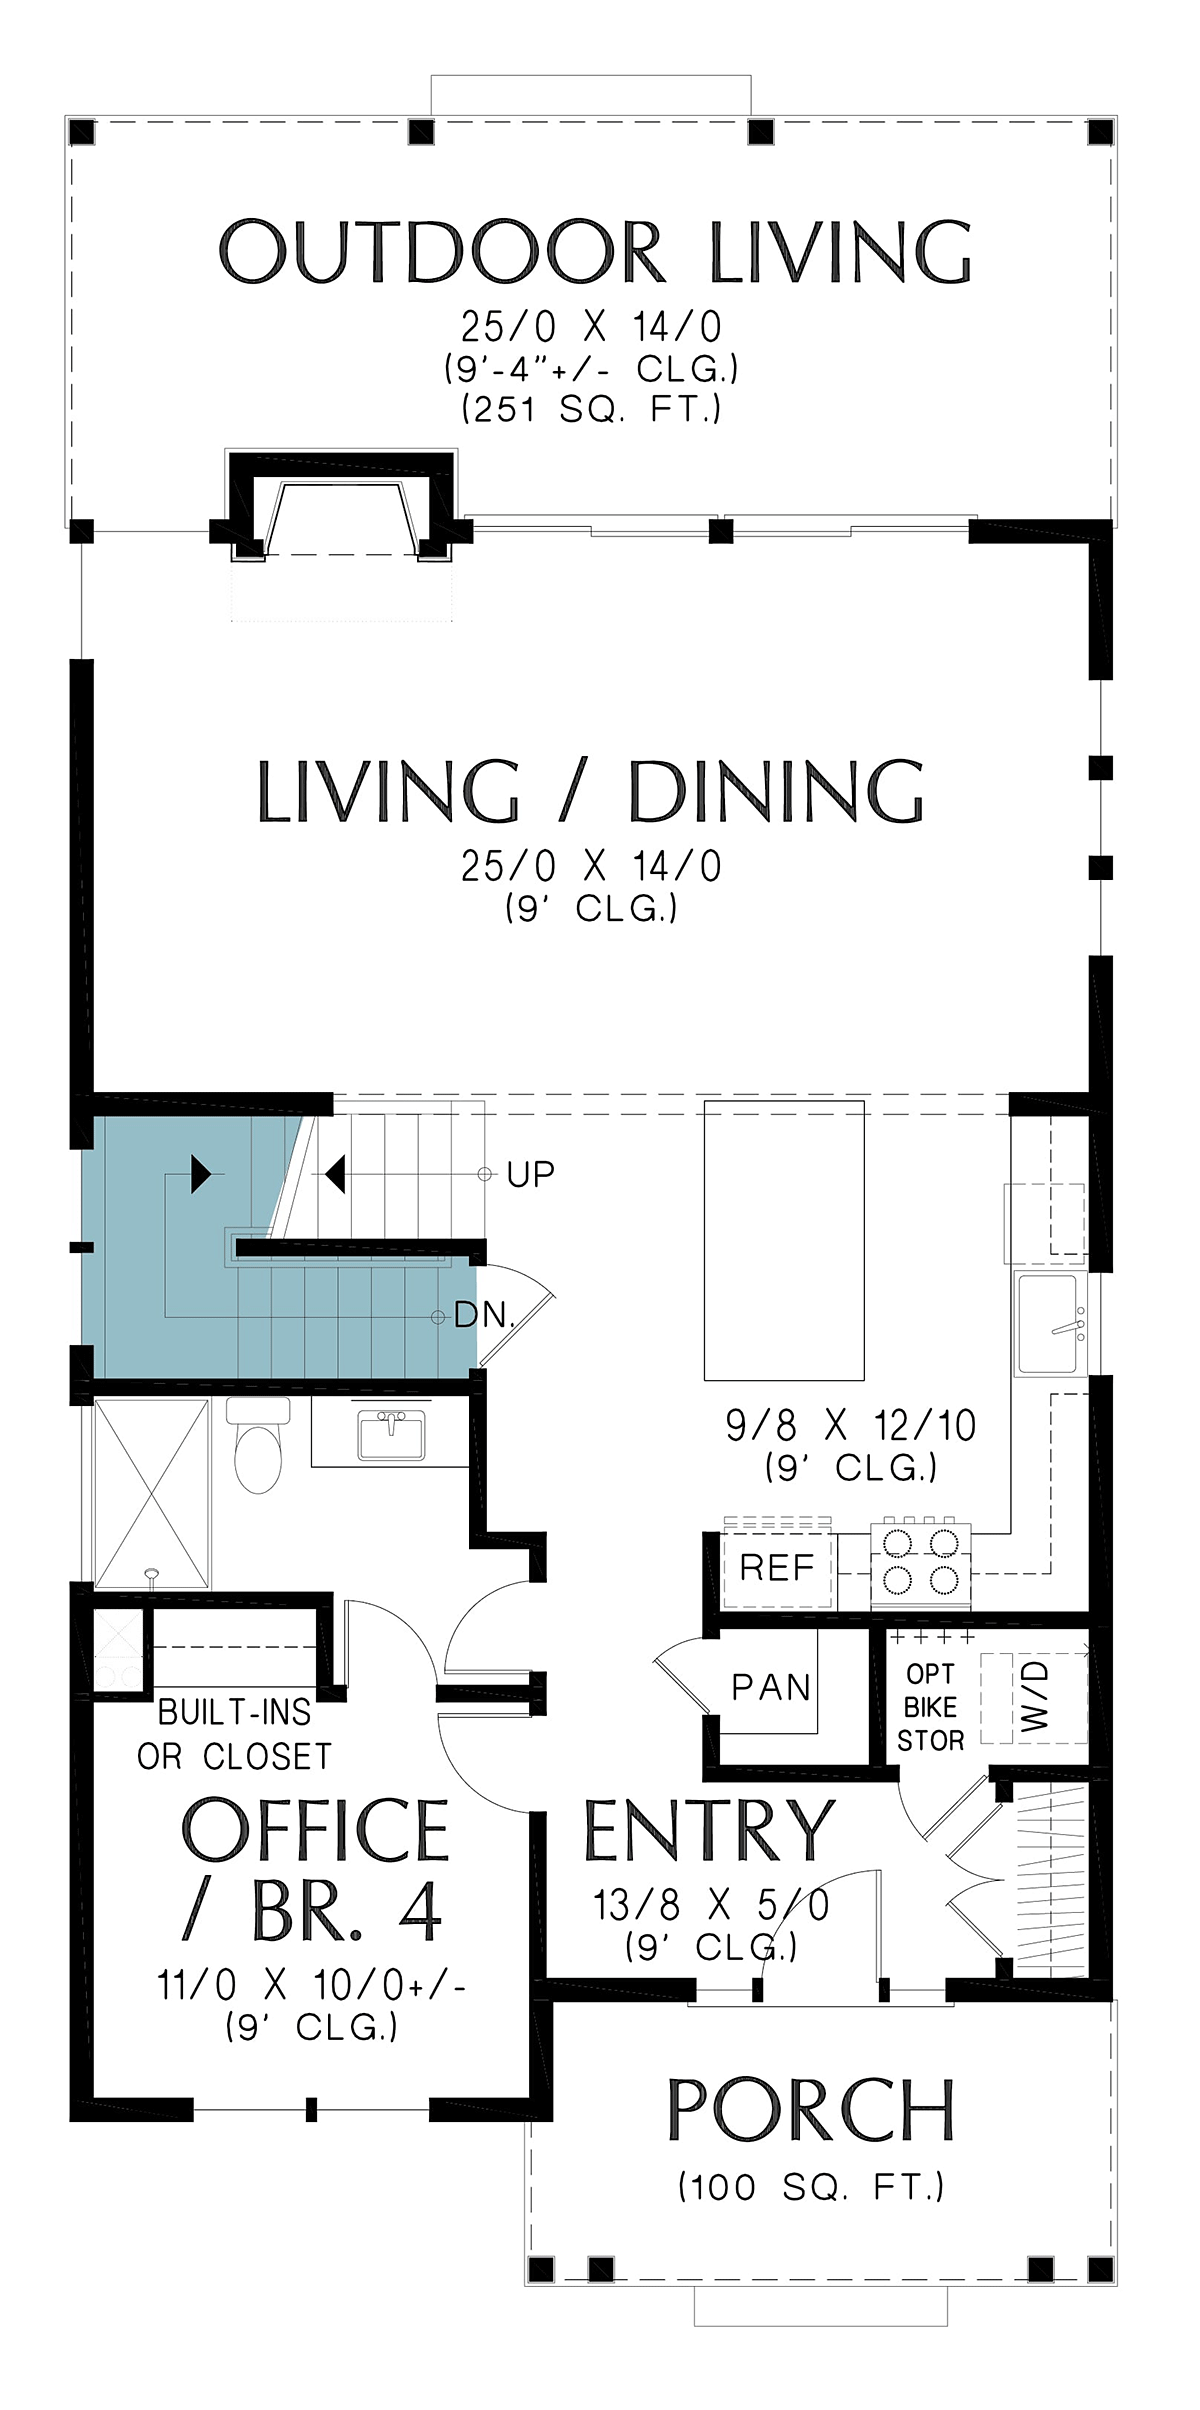 House Plan 83501 Alternate Level One